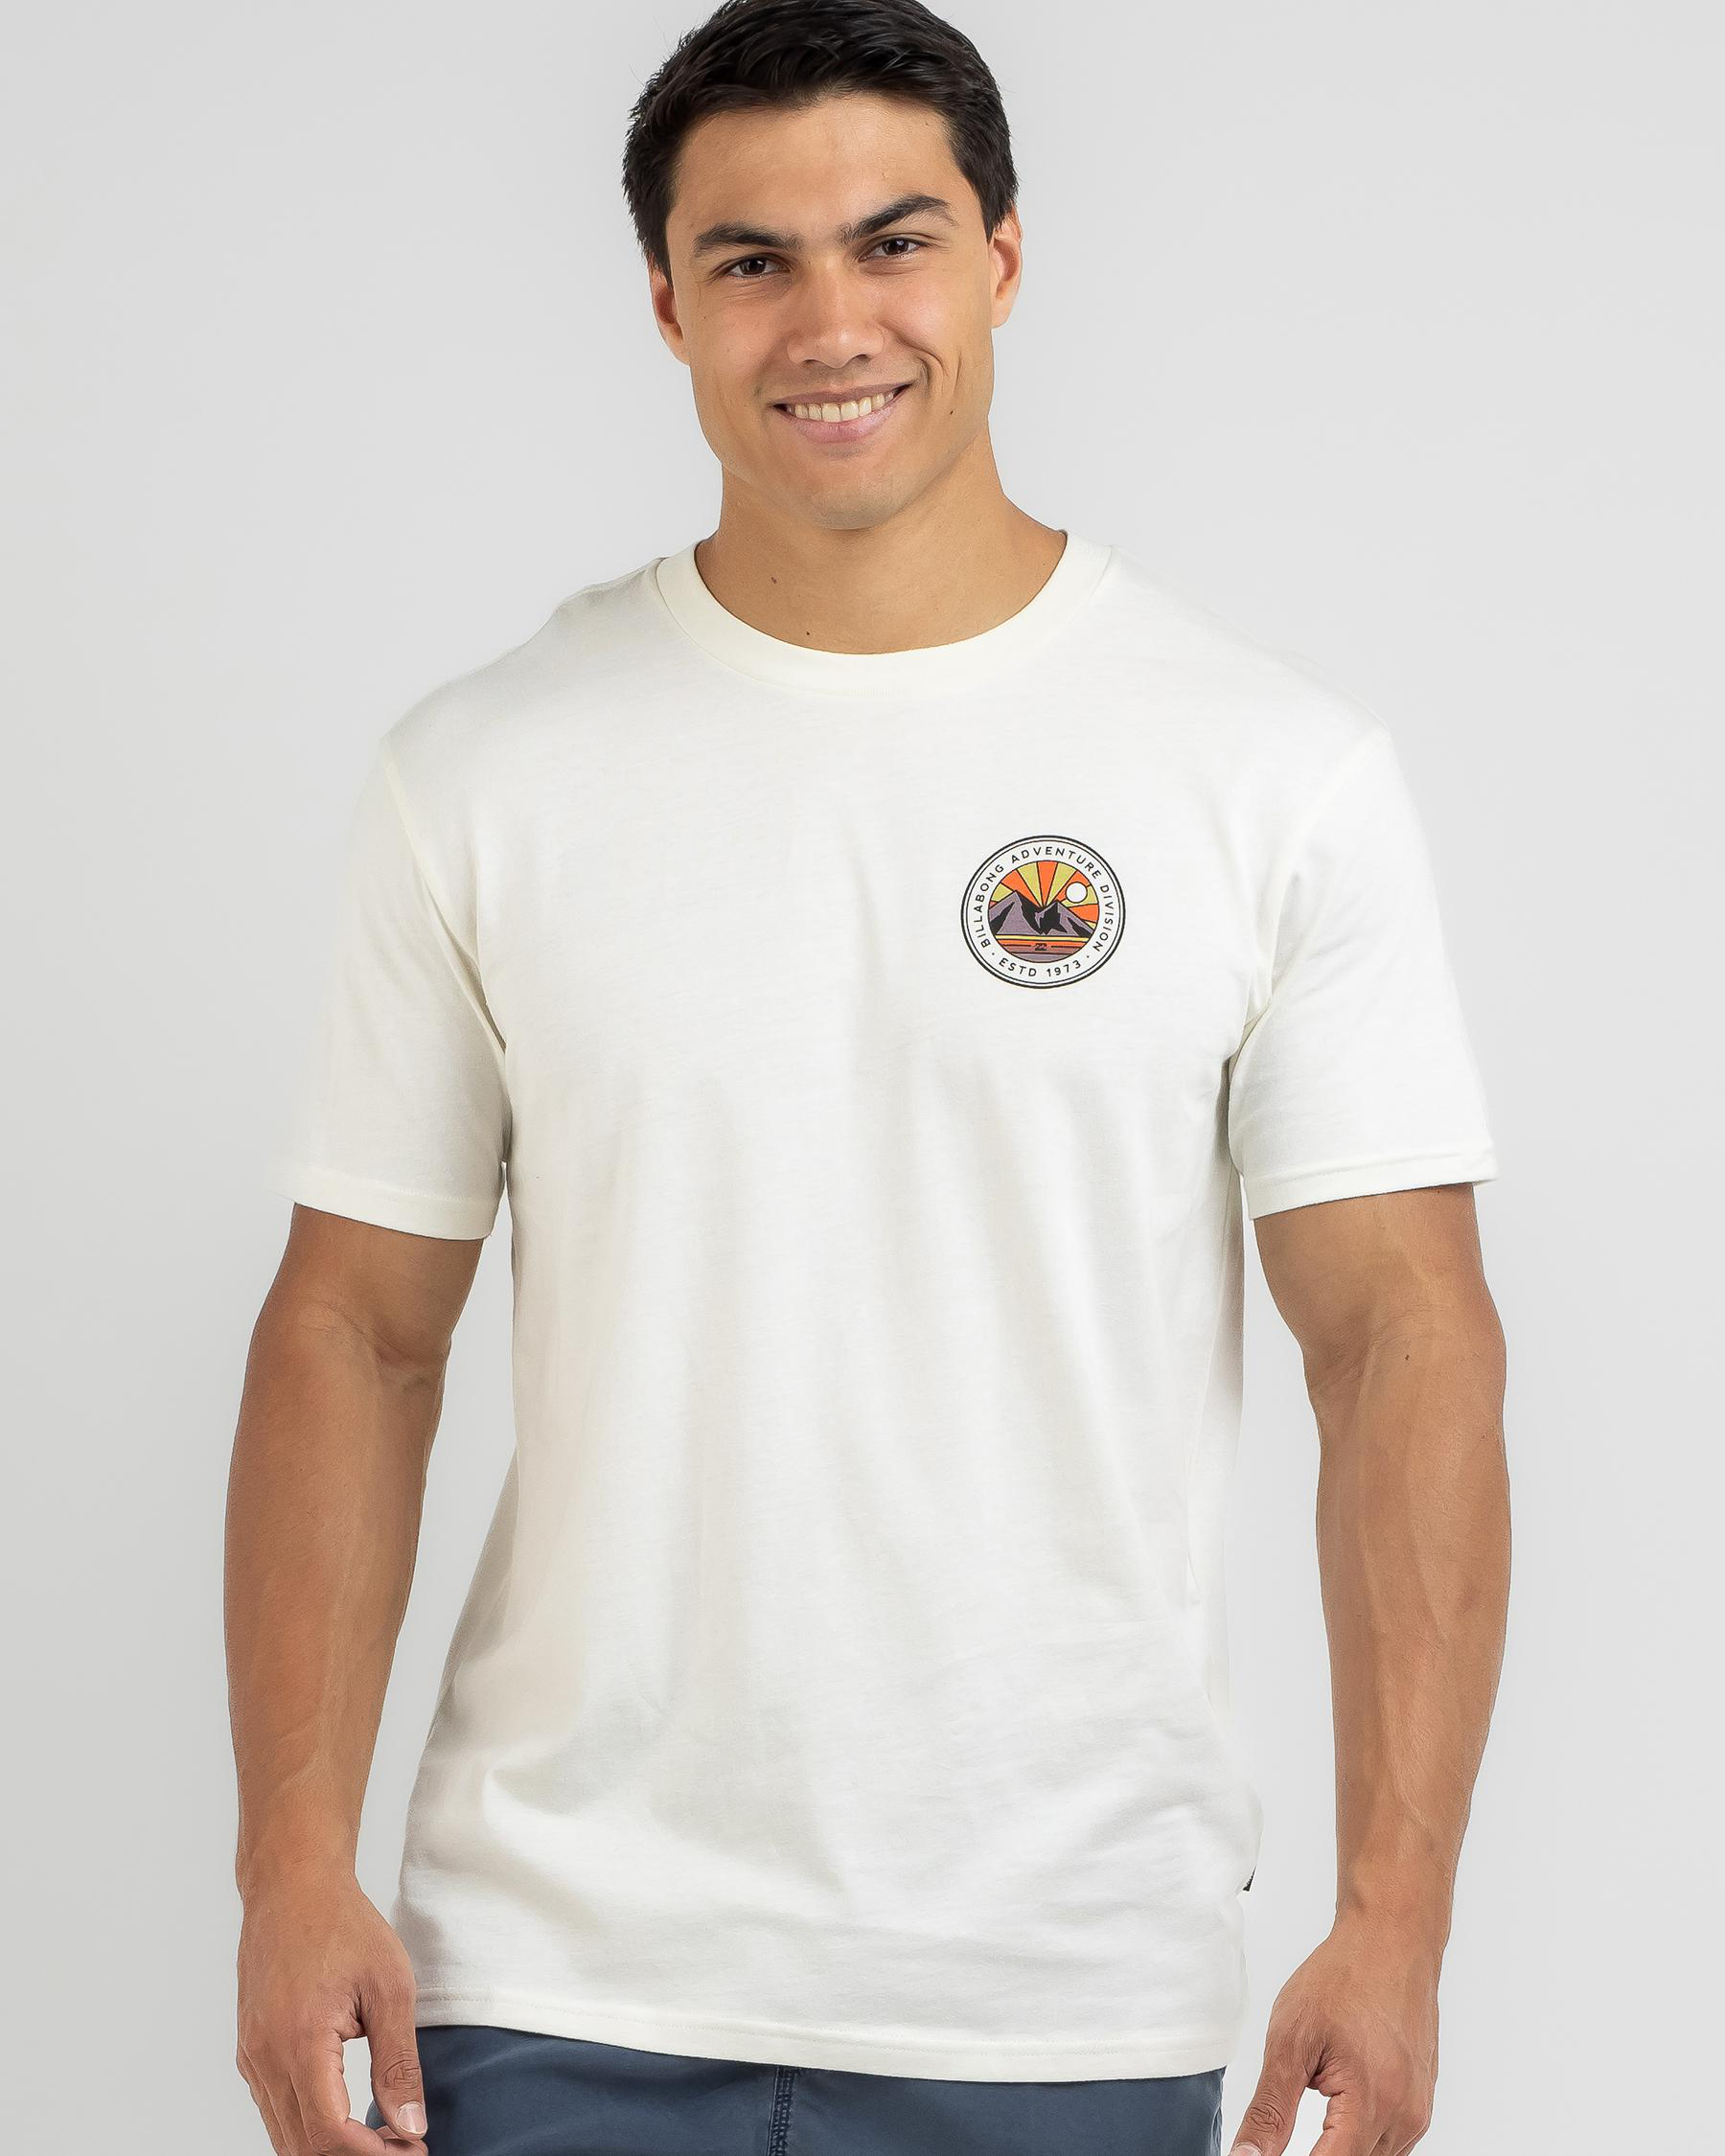 Billabong Rockies T-Shirt - Men's T-Shirts in Off White